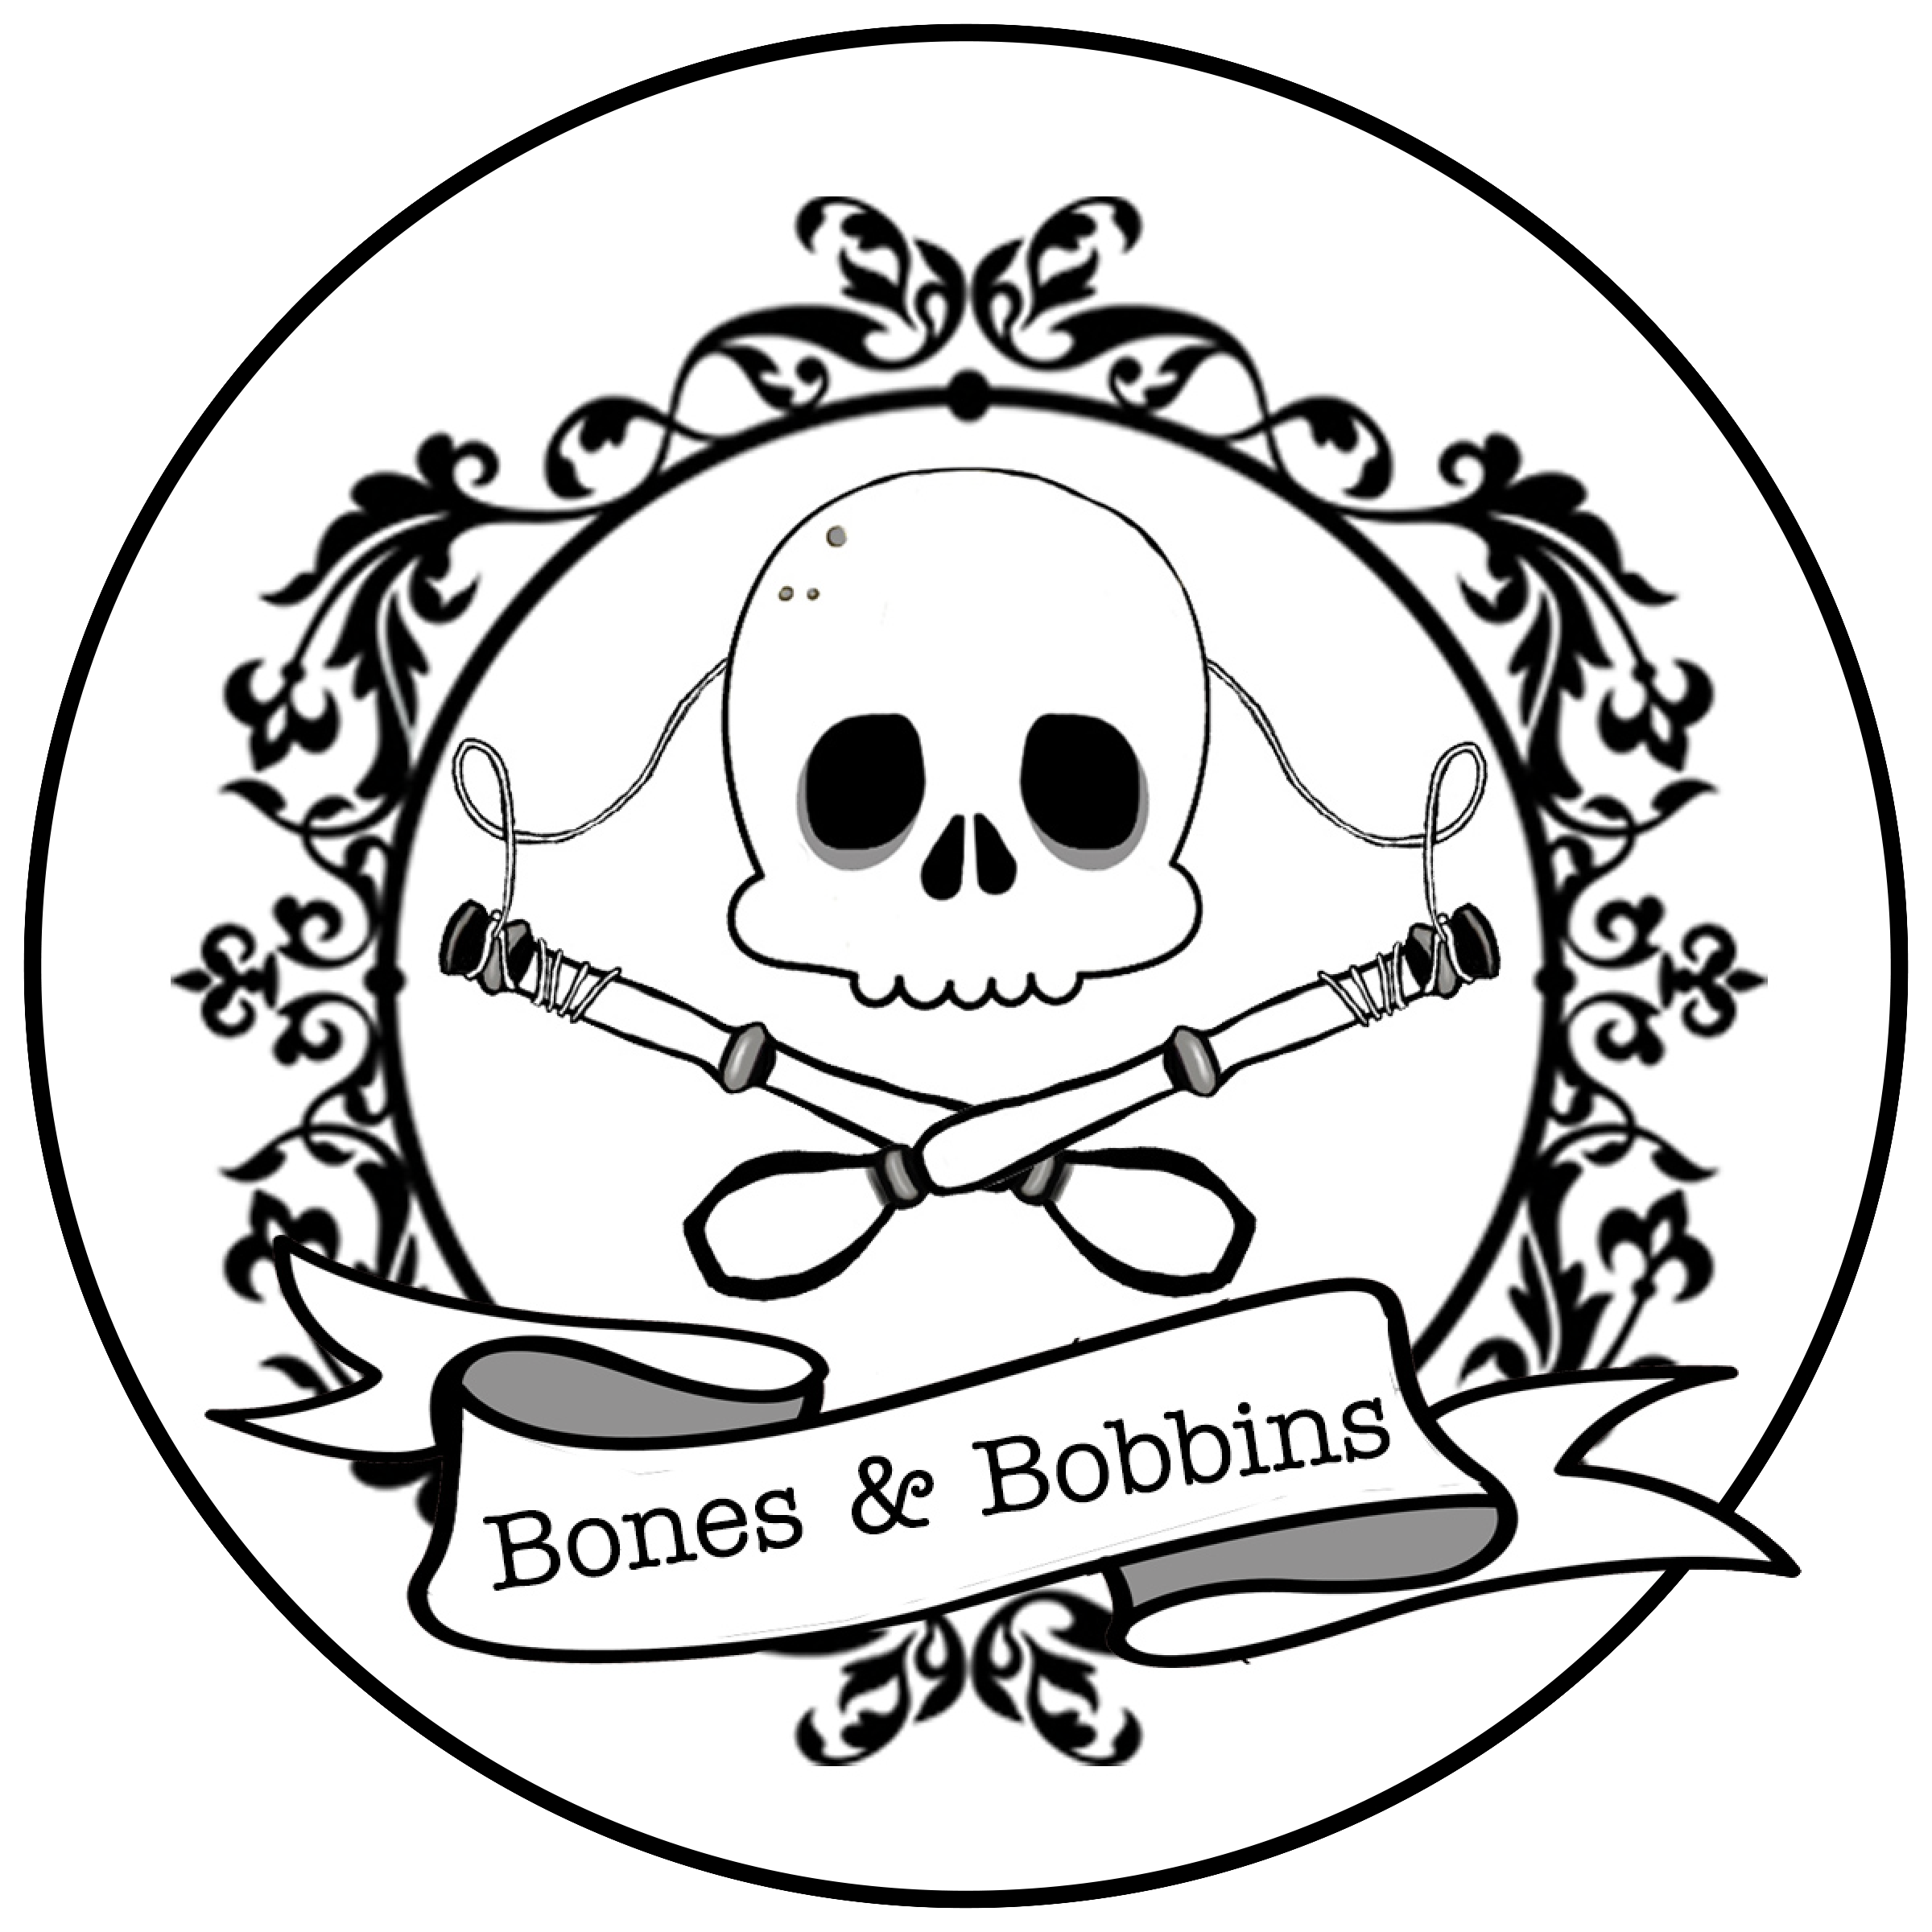 The Bones and Bobbins Podcast